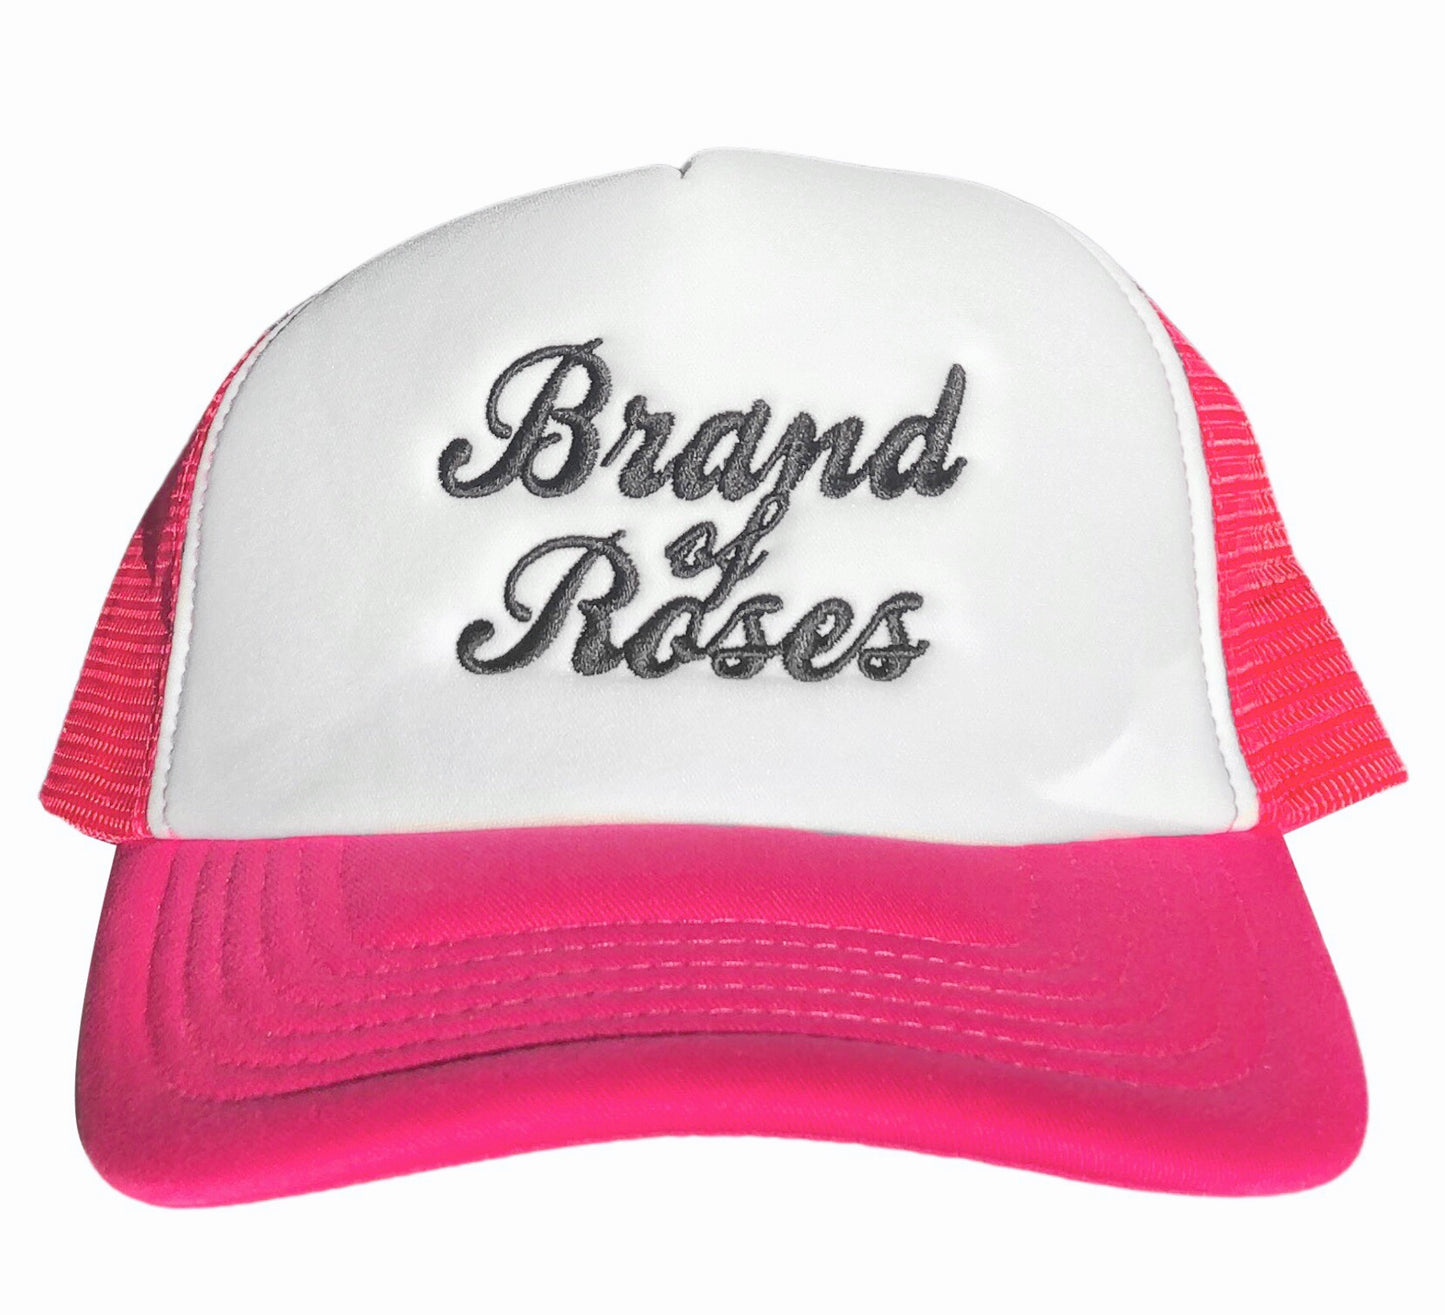 BoR Trucker cap pink